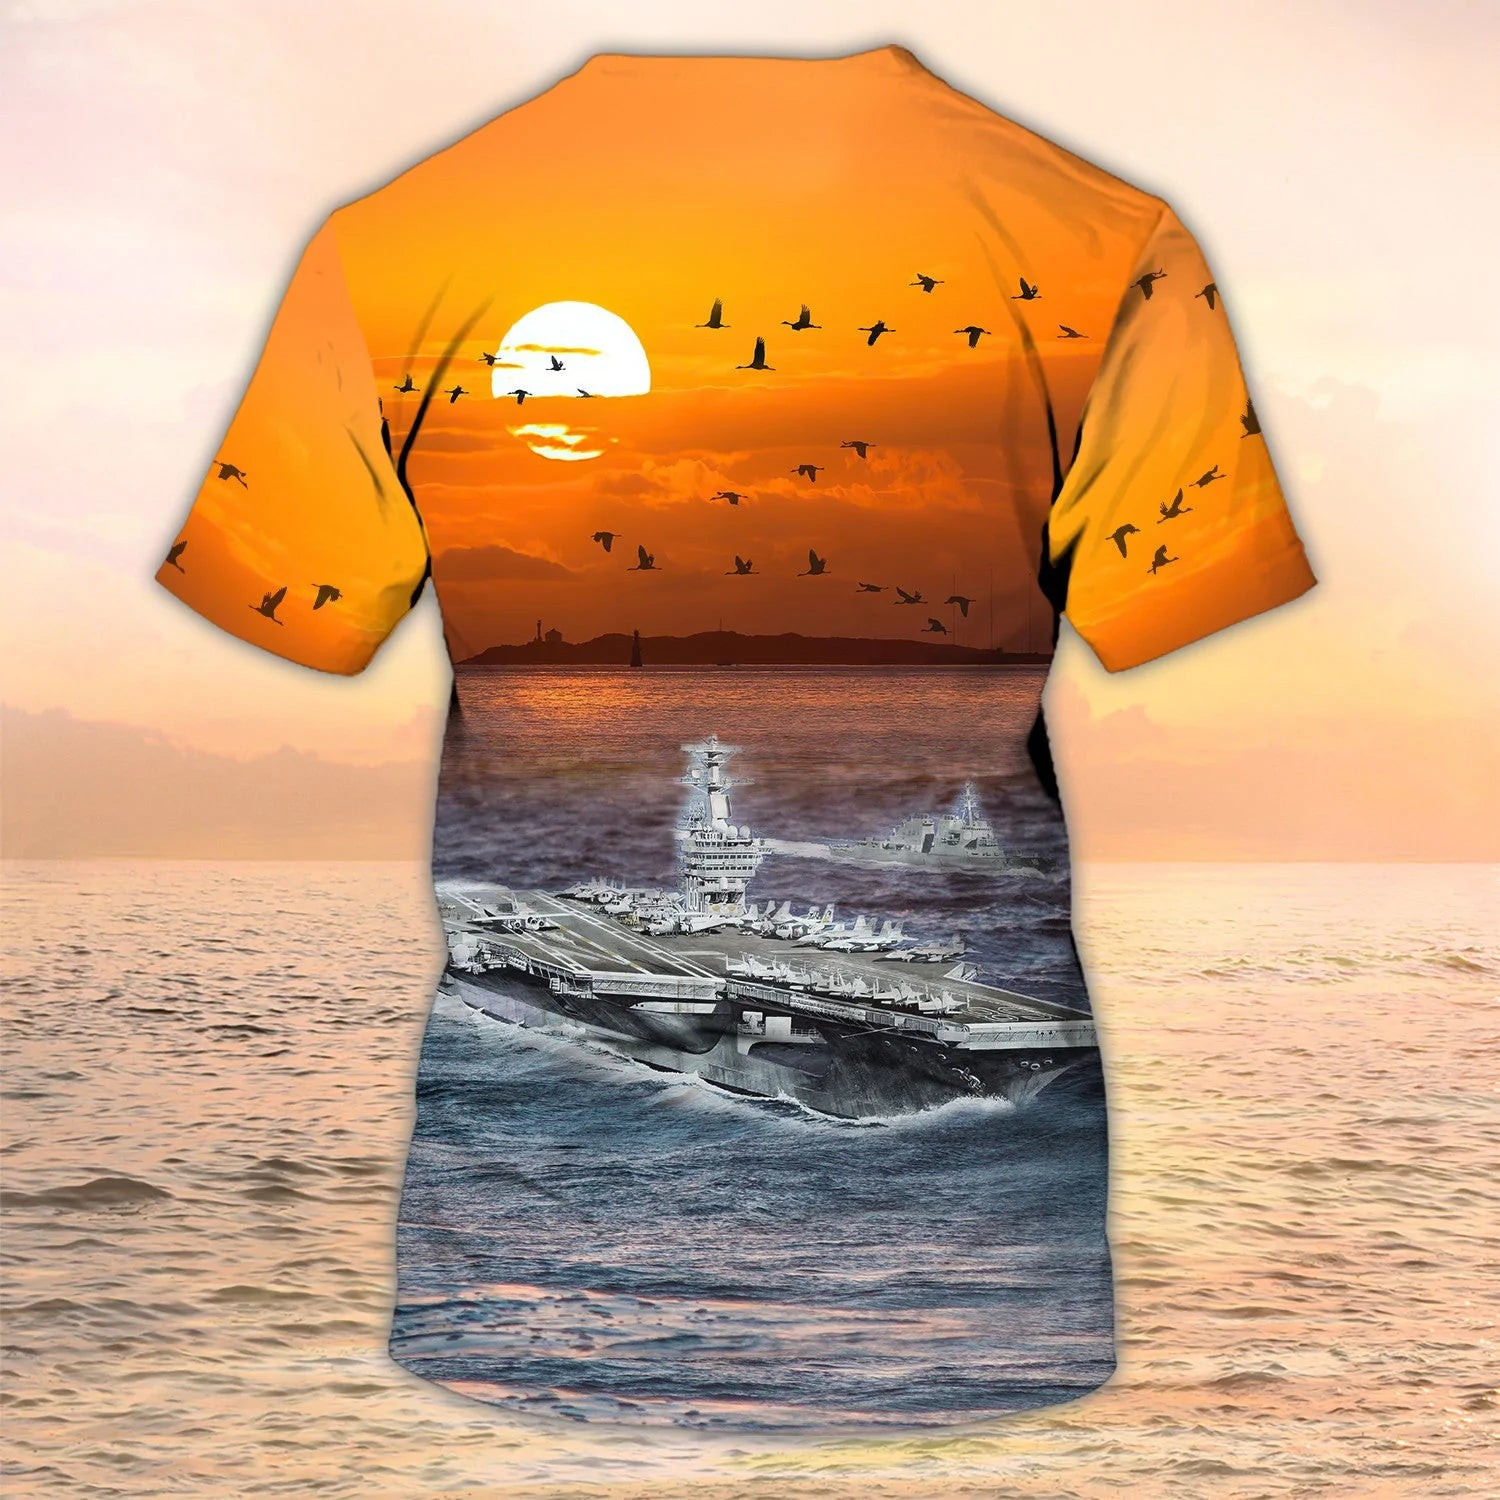 Custom Name 3D Cruise On Shirt, Sublimation Cruise Trip Shirt Men Women